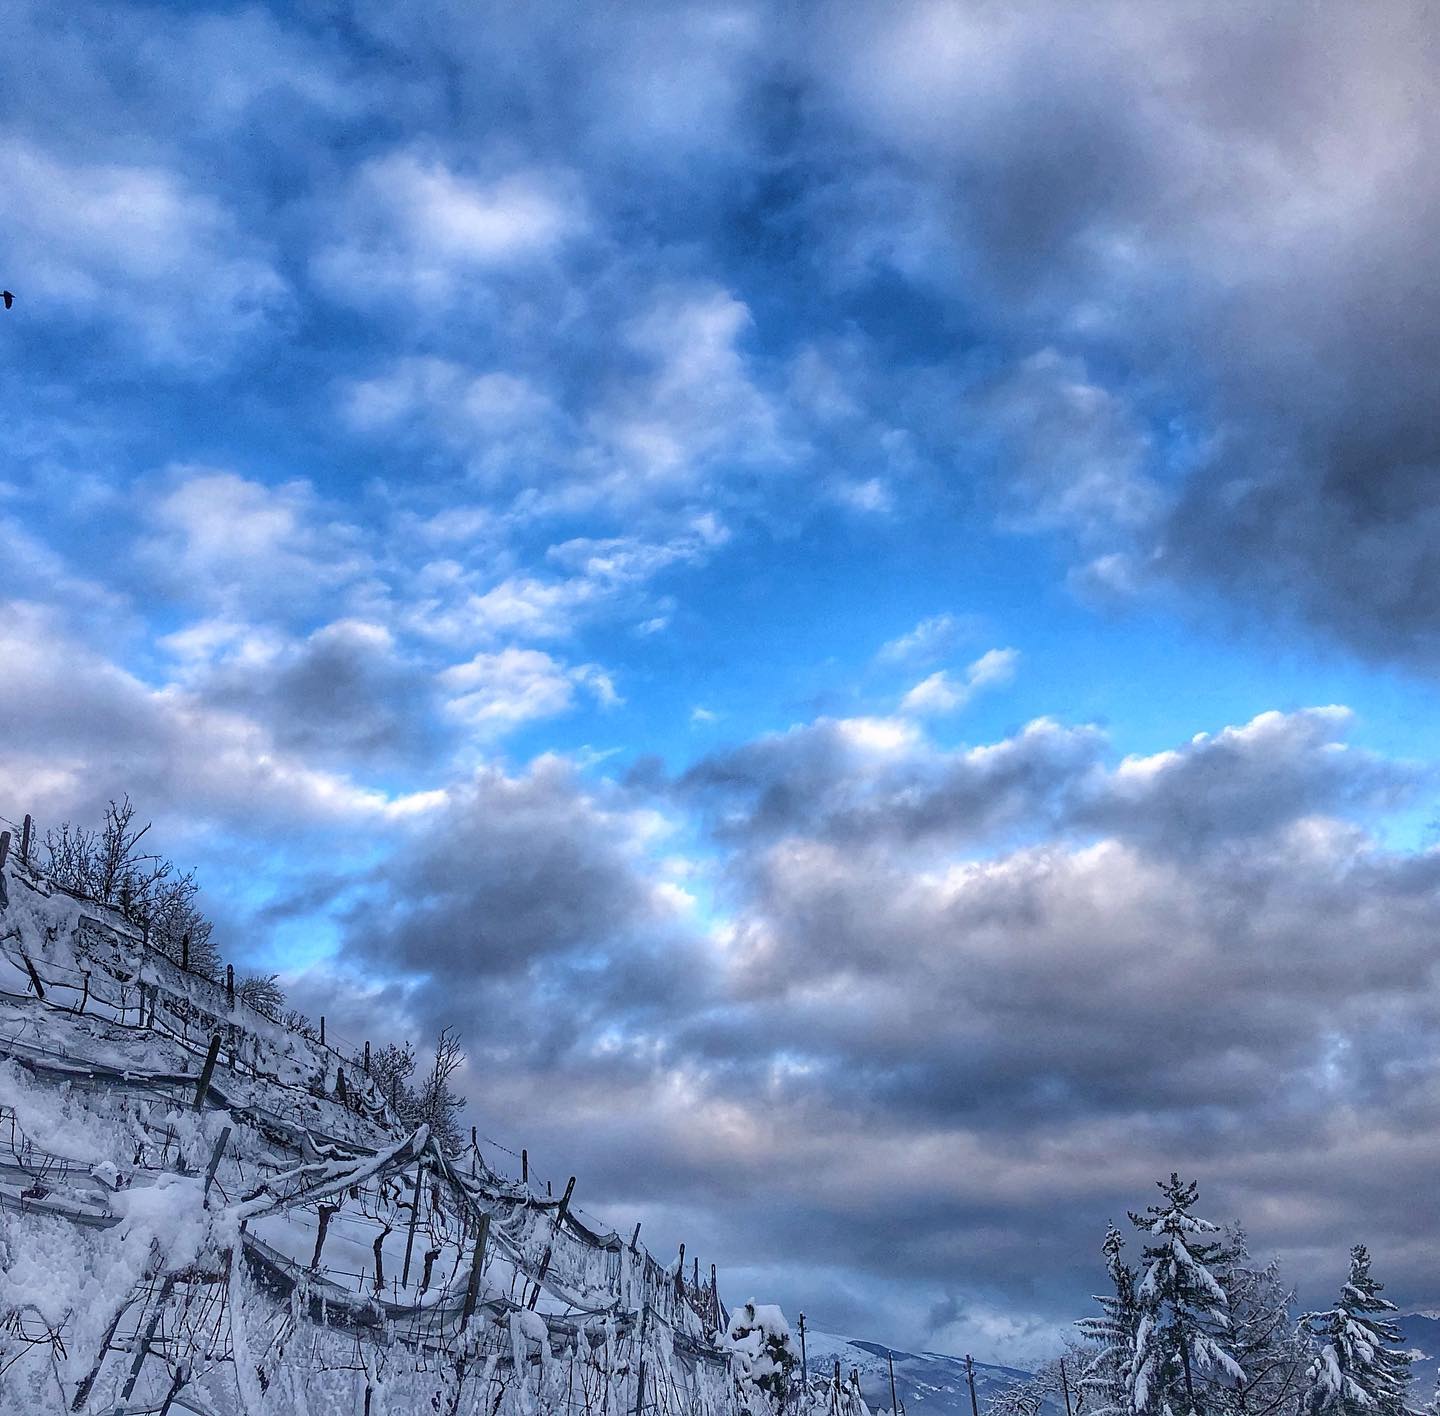 ❄️ 
🇨🇭
.
.
.
.
.
#mountains #mtb #stramtb #nature #mtblife #mtblove #landscape_lovers #earthpix #landscapelovers #ourplanetdaily #welivetoexplore #fantastic_earth #svizzera #switzerland #schweiz #ticino #switzerlandpictures #inlovewithswitzerland #ticinomoments #lugano #inspiration #passion #motivation #experience #explore #snow #landscapephotography